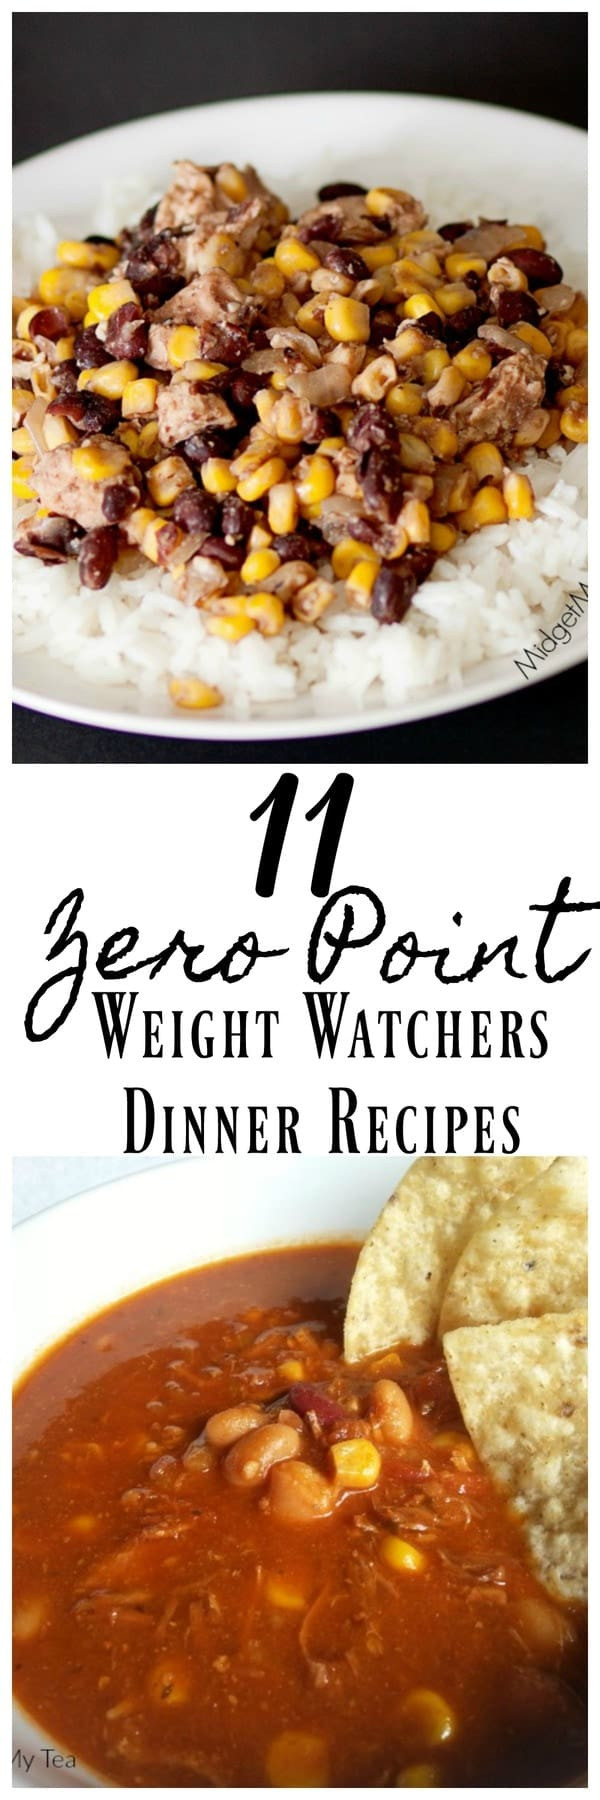 Weight Watcher Dinners
 11 Zero Point Weight Watchers Dinner Recipes • Mid Momma